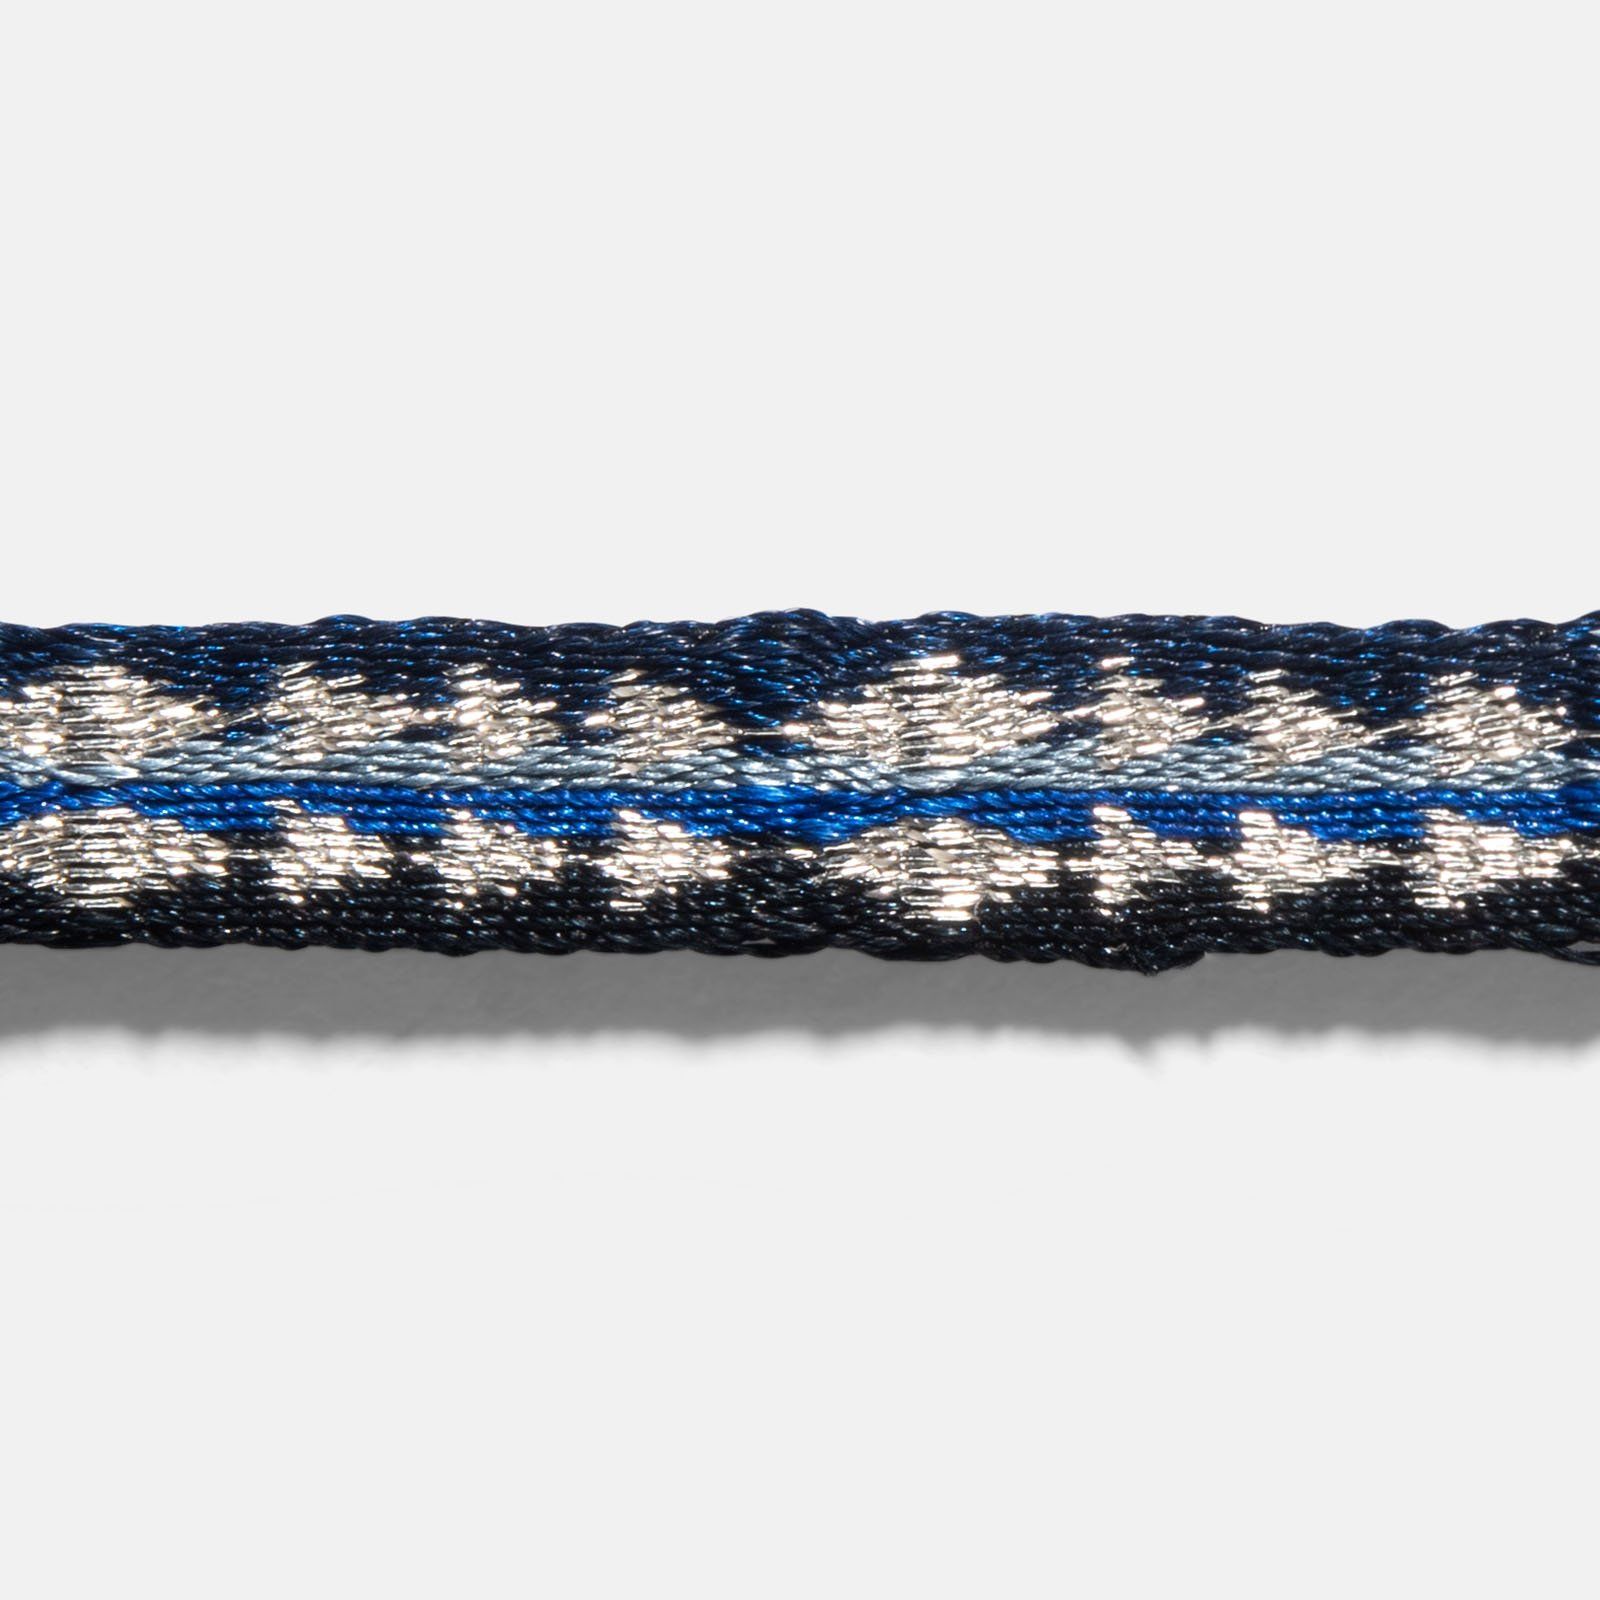 Guanabana Handmade Woven Bracelet Blue Arrows